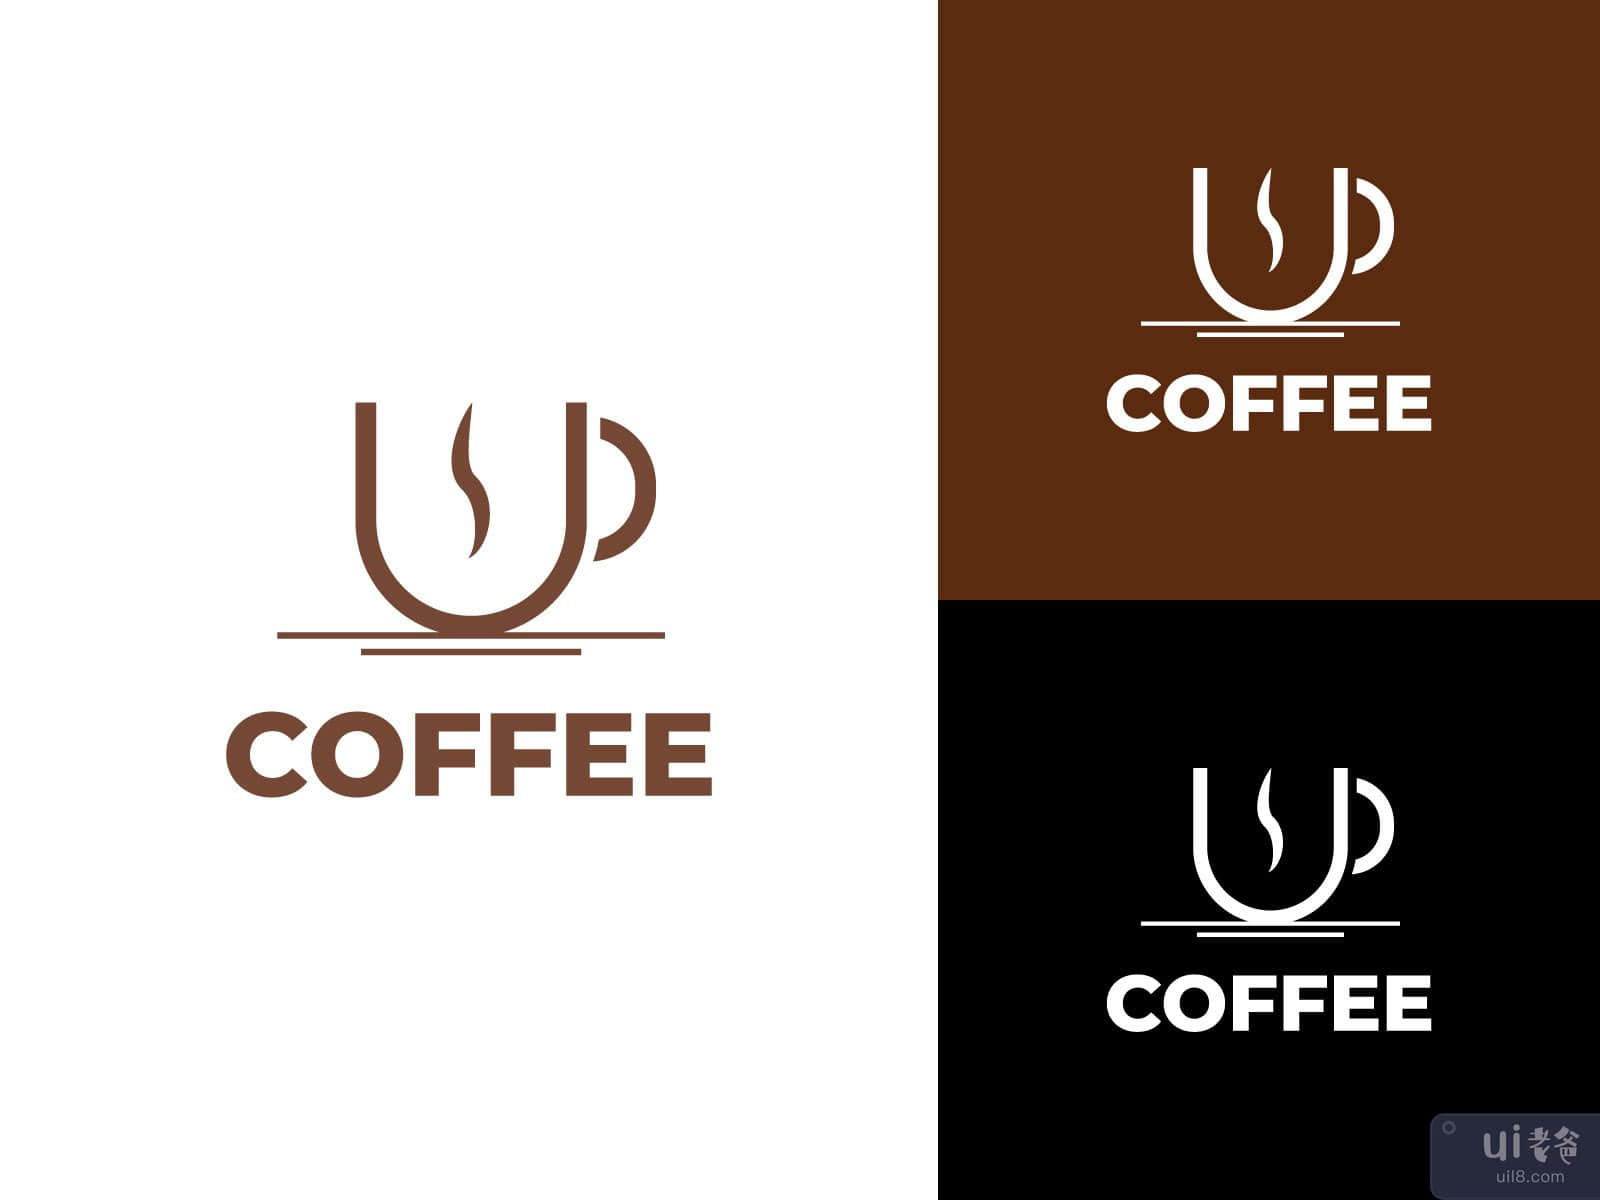 Coffee Shop vector logo  template design for shop or coffee company.